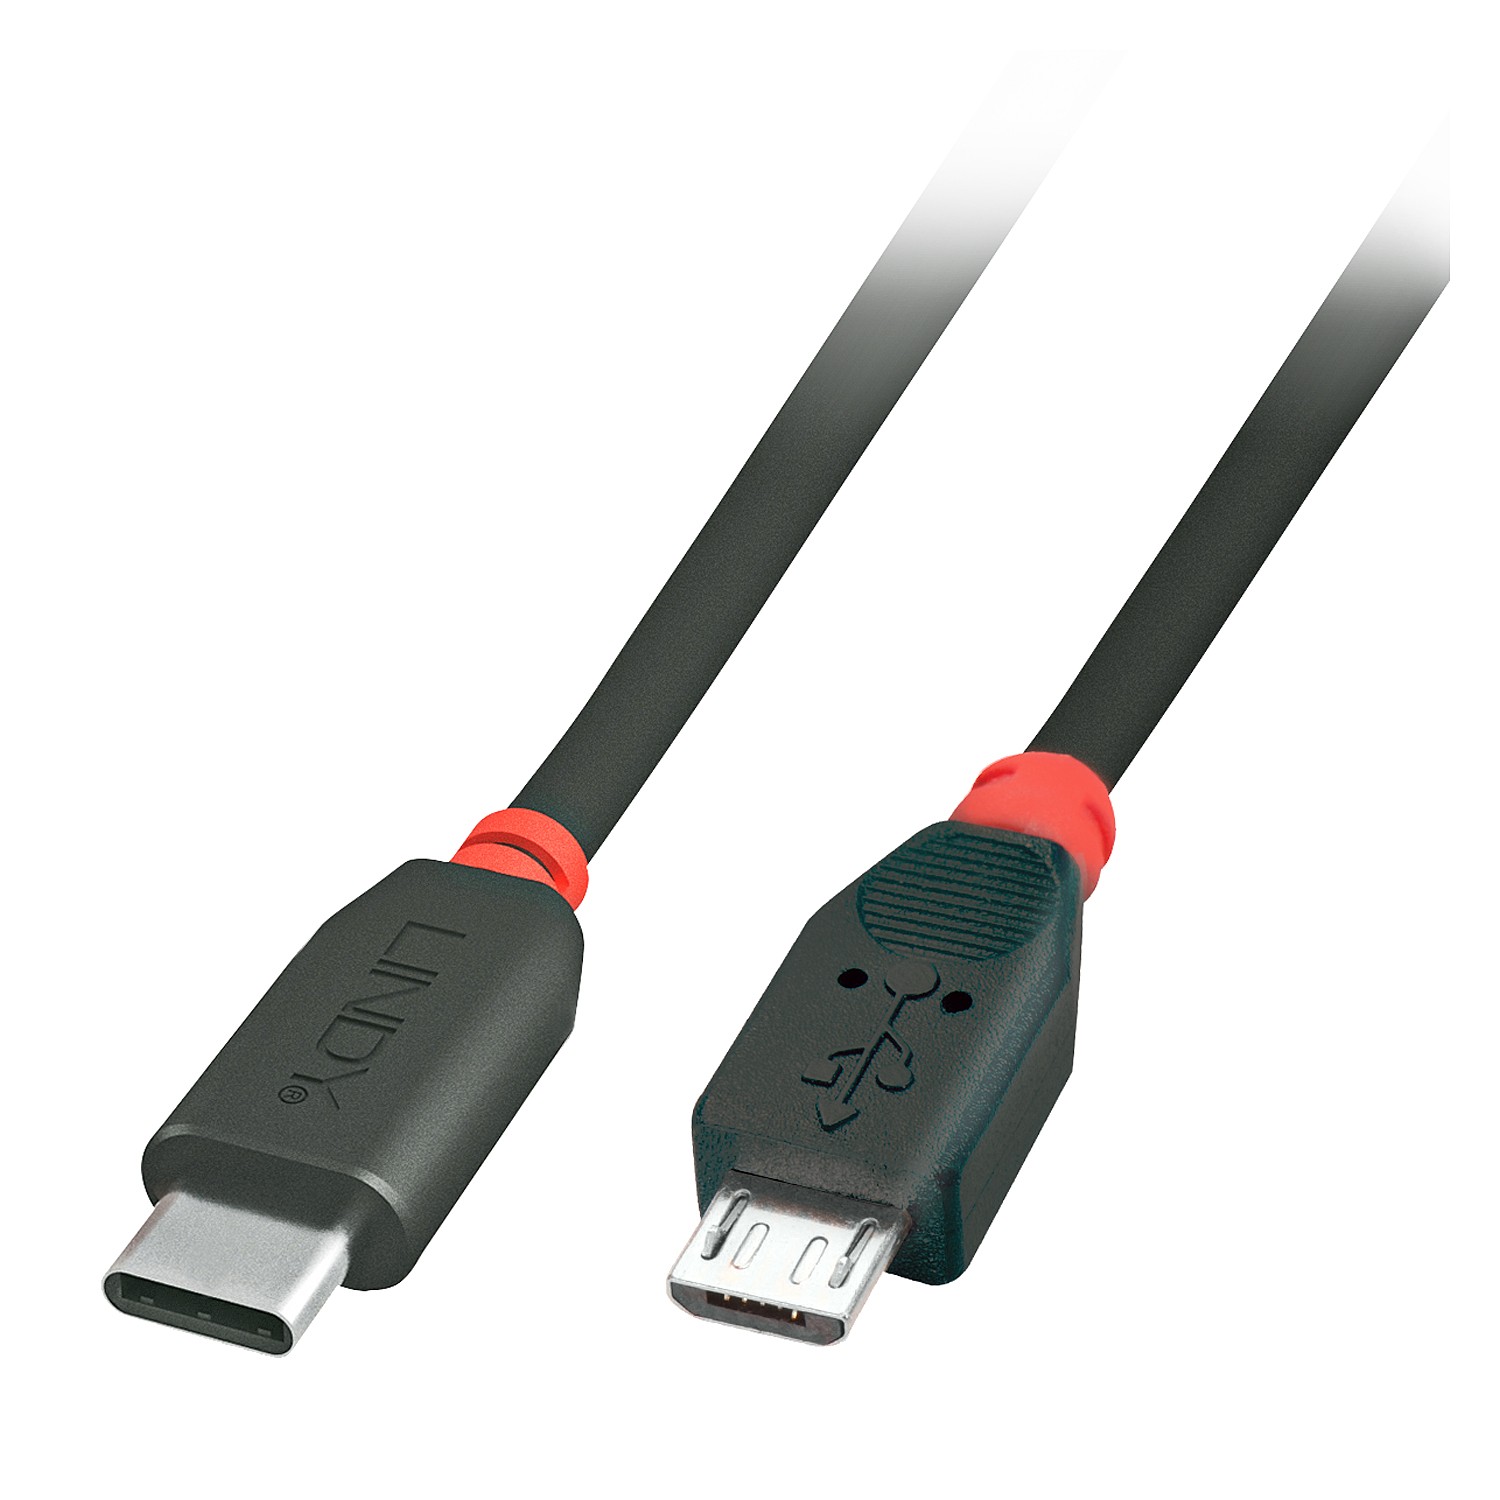 High usb 2.0. Кабель Micro USB 3.0 B 2 USB. USB 2.0 Type-a MICROUSB 2.0. Кабель Micro USB Type c. USB 2.0 TYPEC кабель.